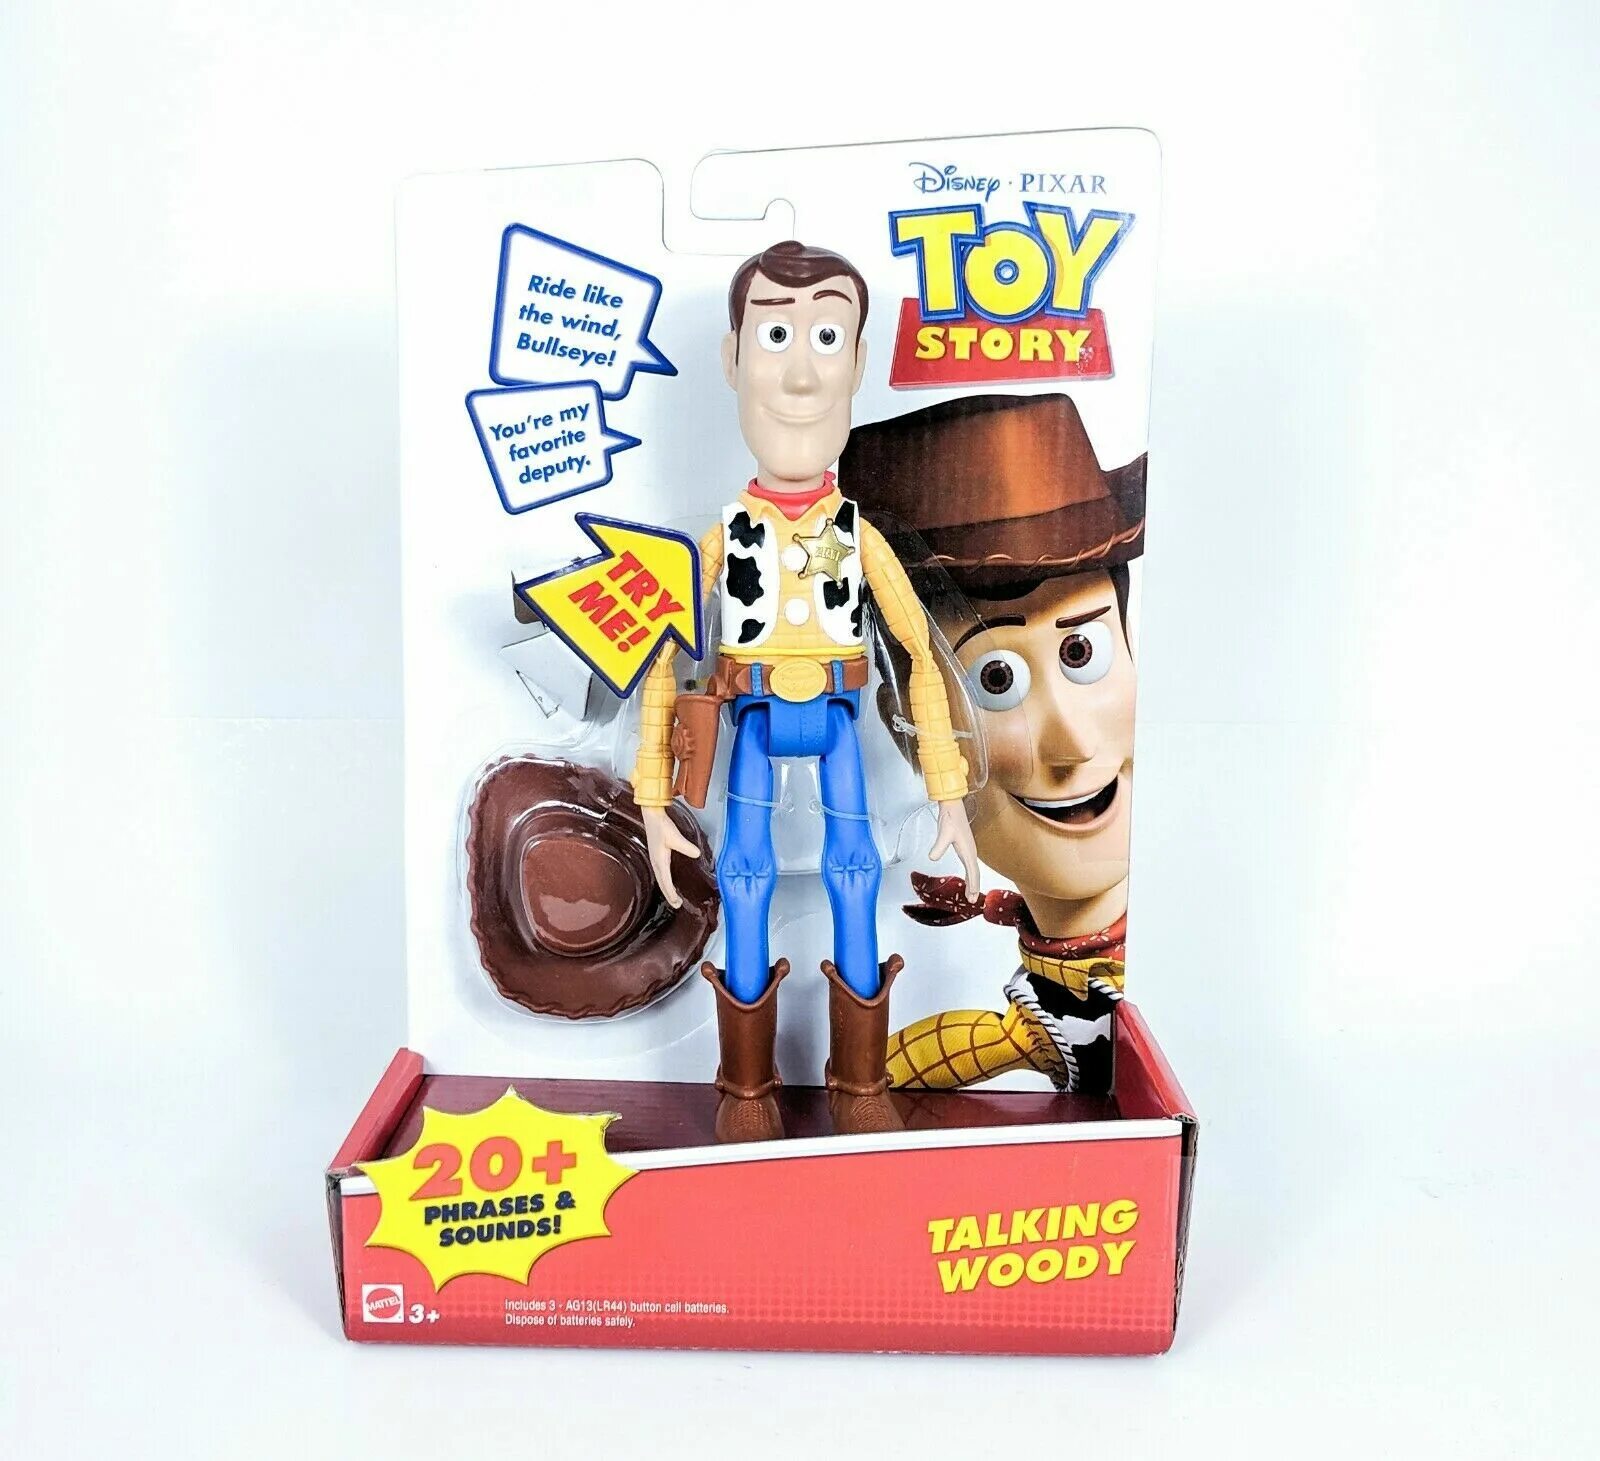 Toy talk. Toy story рекс Дисней стор. Woody and Buzz Toy. Базз и Вуди и РЭКС игрушки. Фигурка дио с головой Вуди.